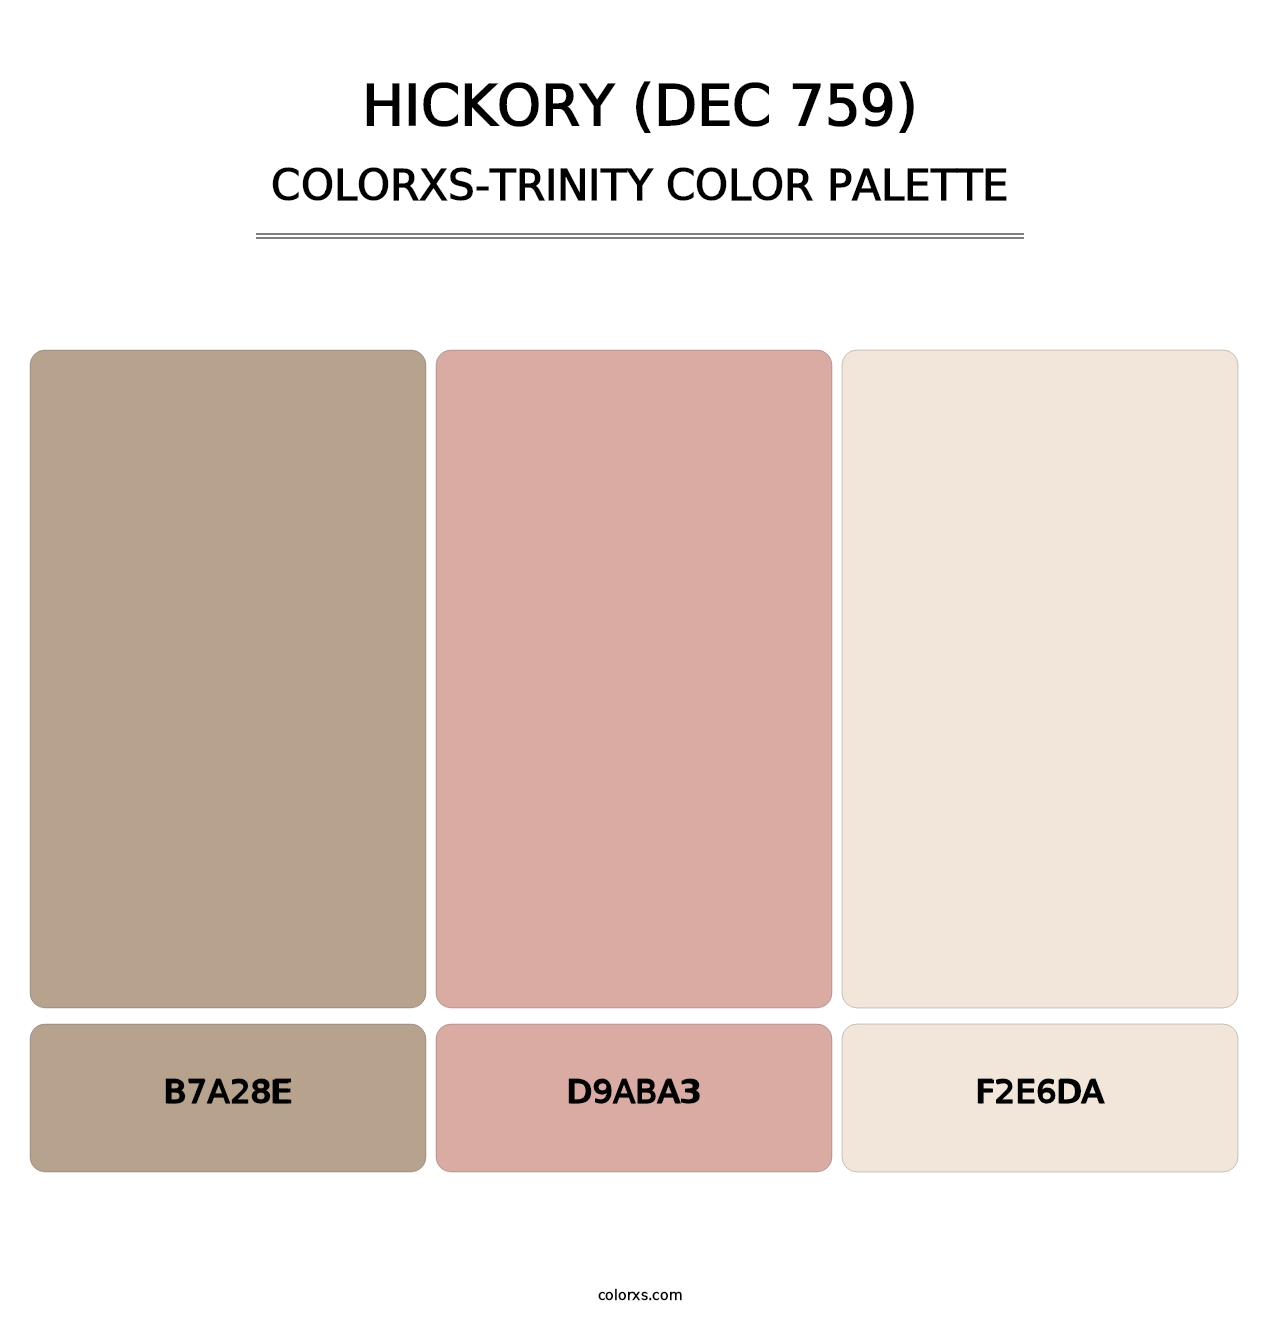 Hickory (DEC 759) - Colorxs Trinity Palette